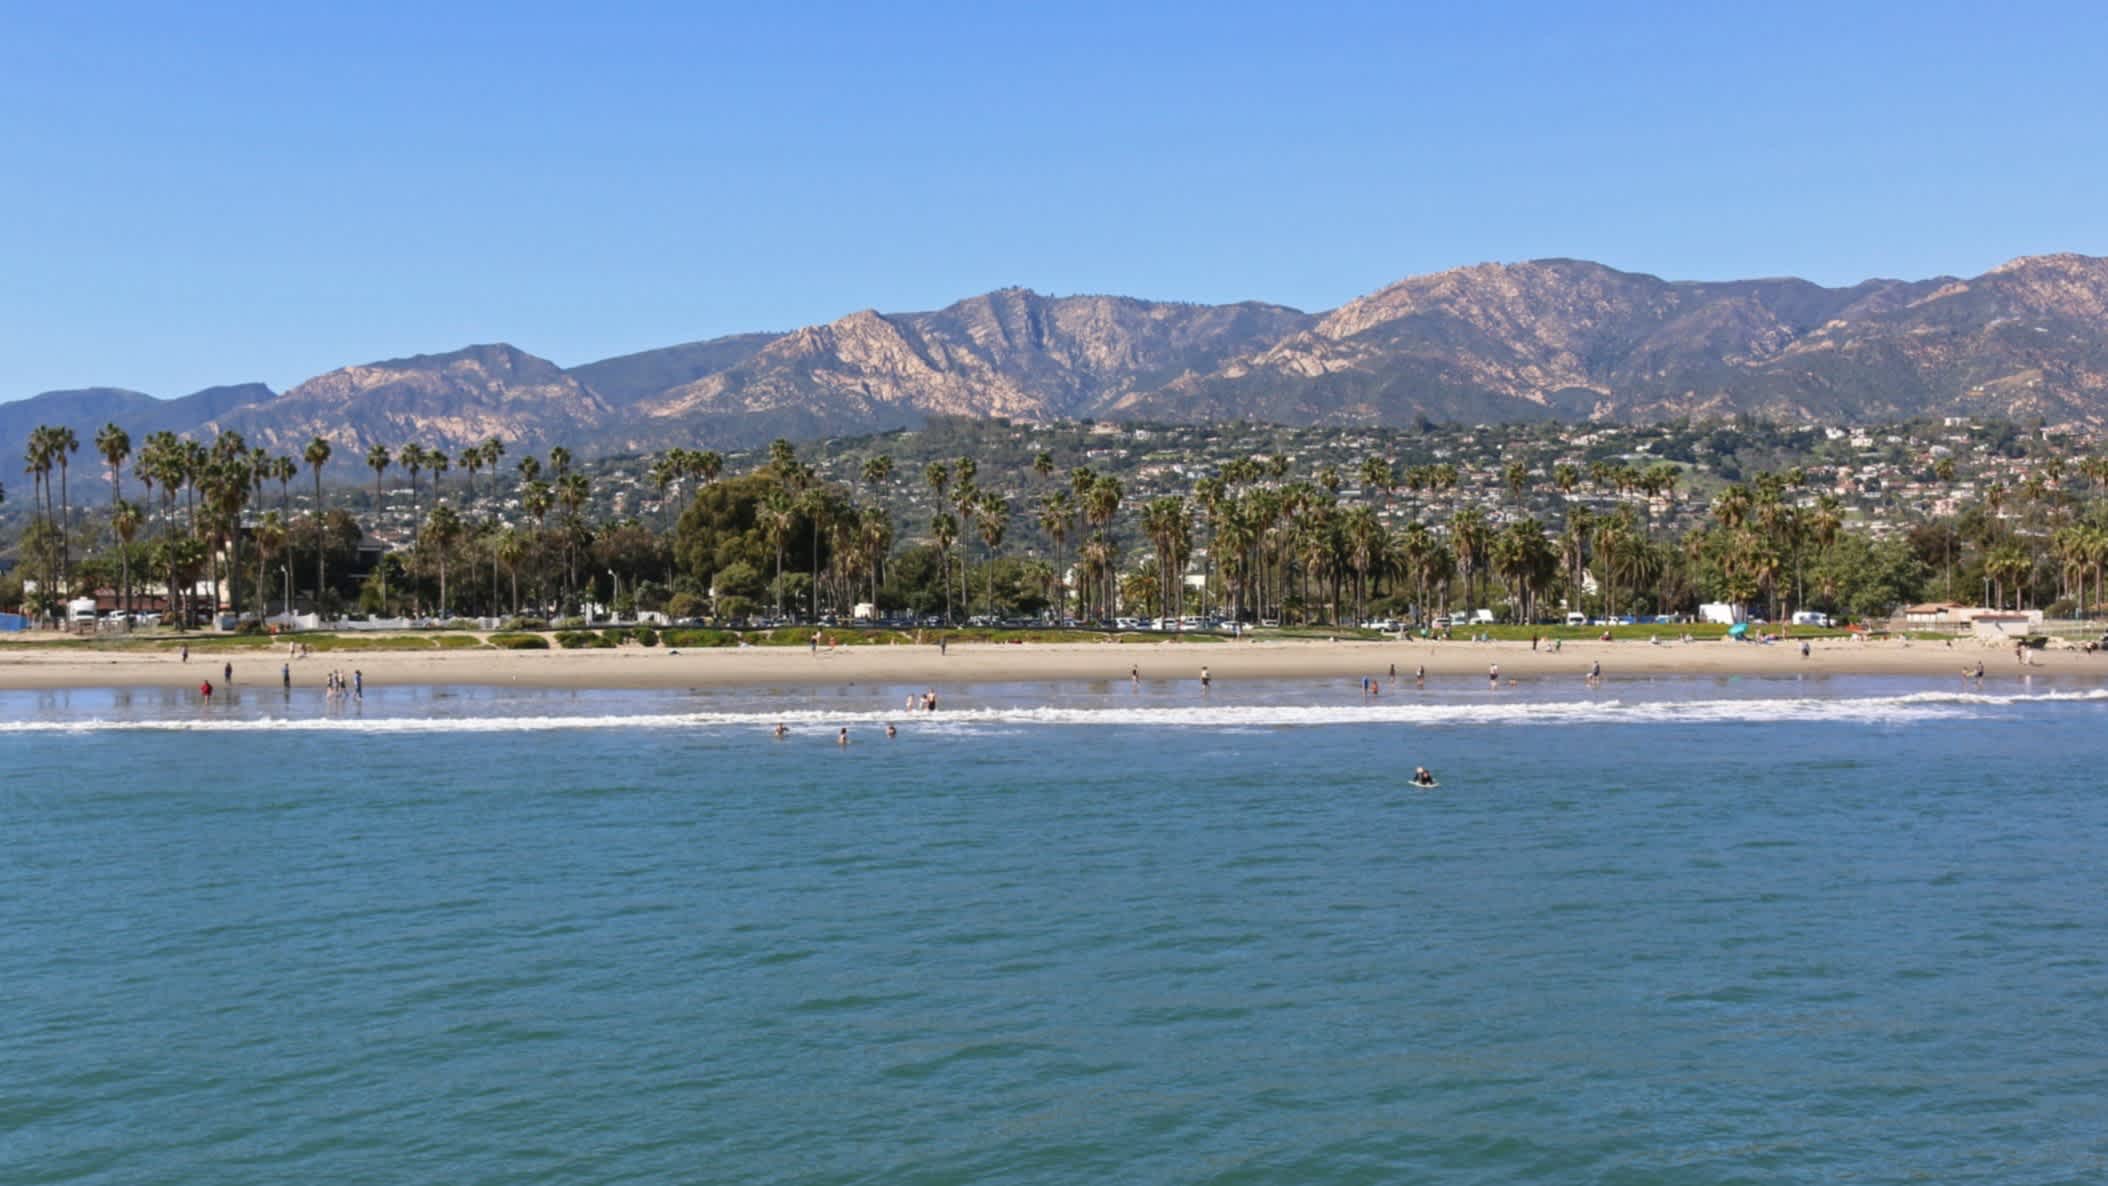 Banc de sable bordés de palmiers sur la plage East Beach, Santa Barbara en Californie